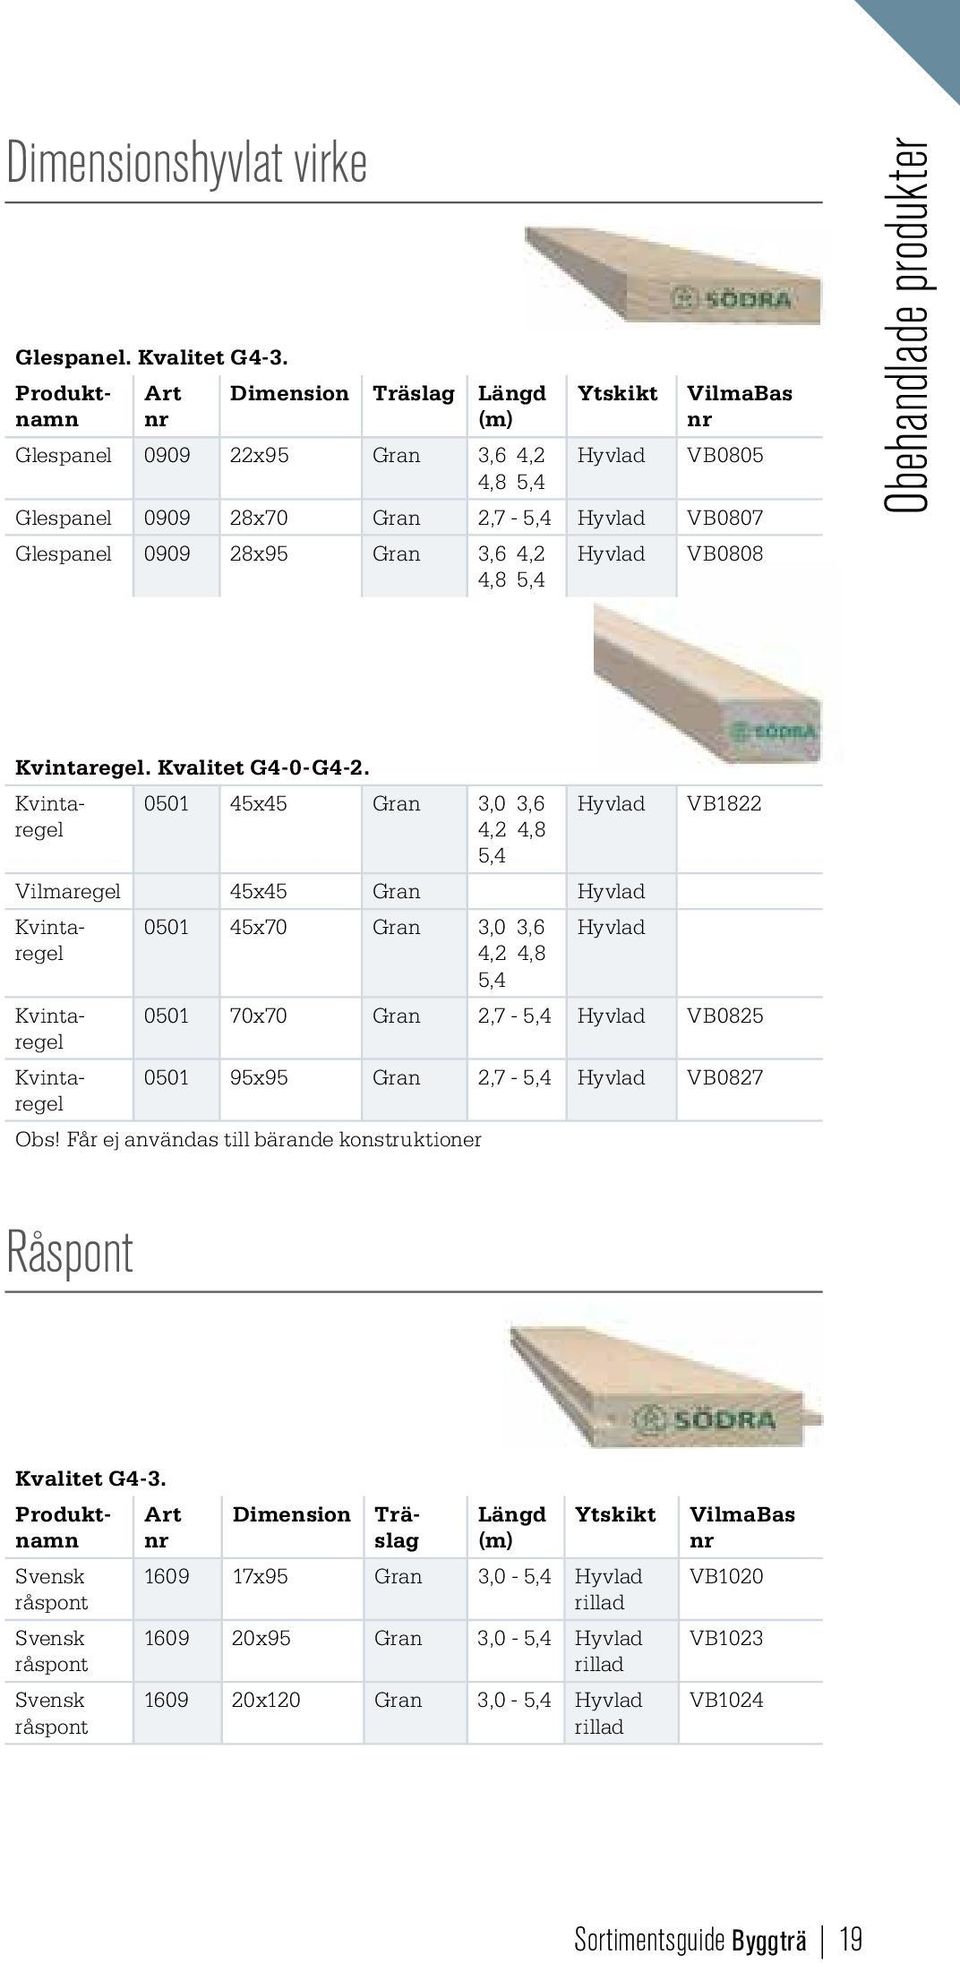 VB0808 4,8 5,4 Obehandlade produkter Kvintaregel. Kvalitet G4-0-G4-2. 0501 45x45 Gran 3,0 3,6 4,2 4,8 5,4 Hyvlad VB1822 Råspont Kvalitet G4-3.